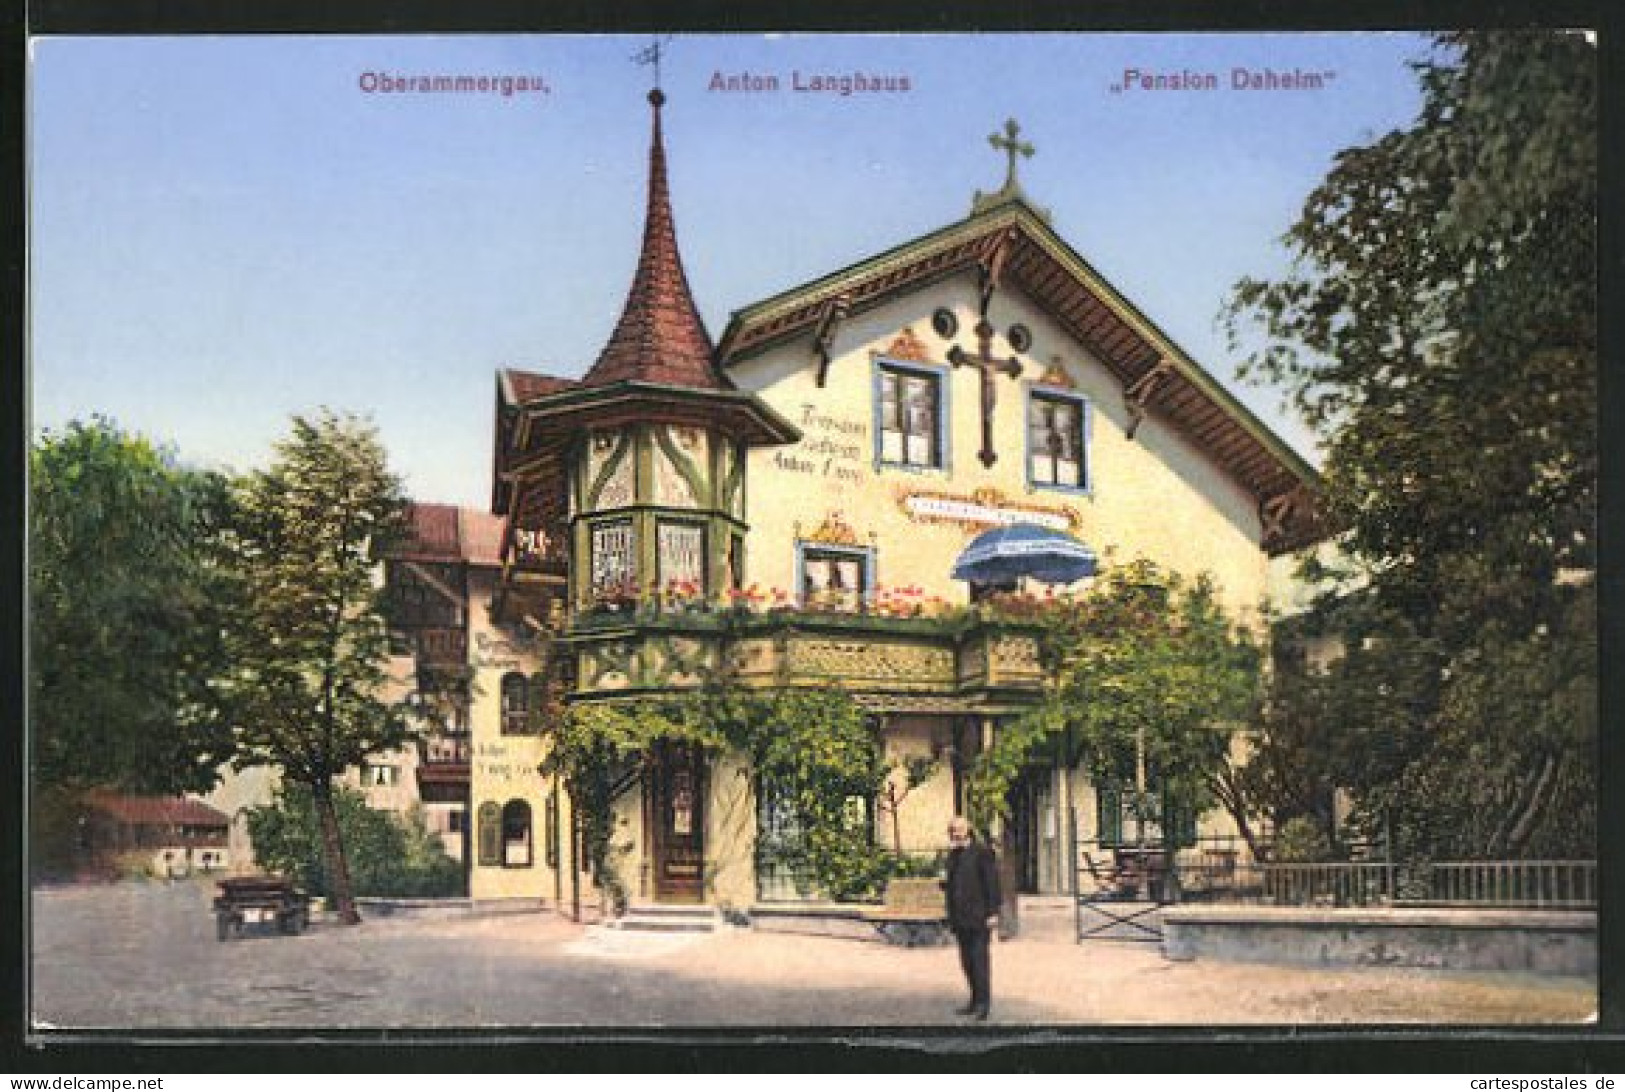 AK Oberammergau, Hotel Pension Daheim, Anton Langhaus  - Oberammergau